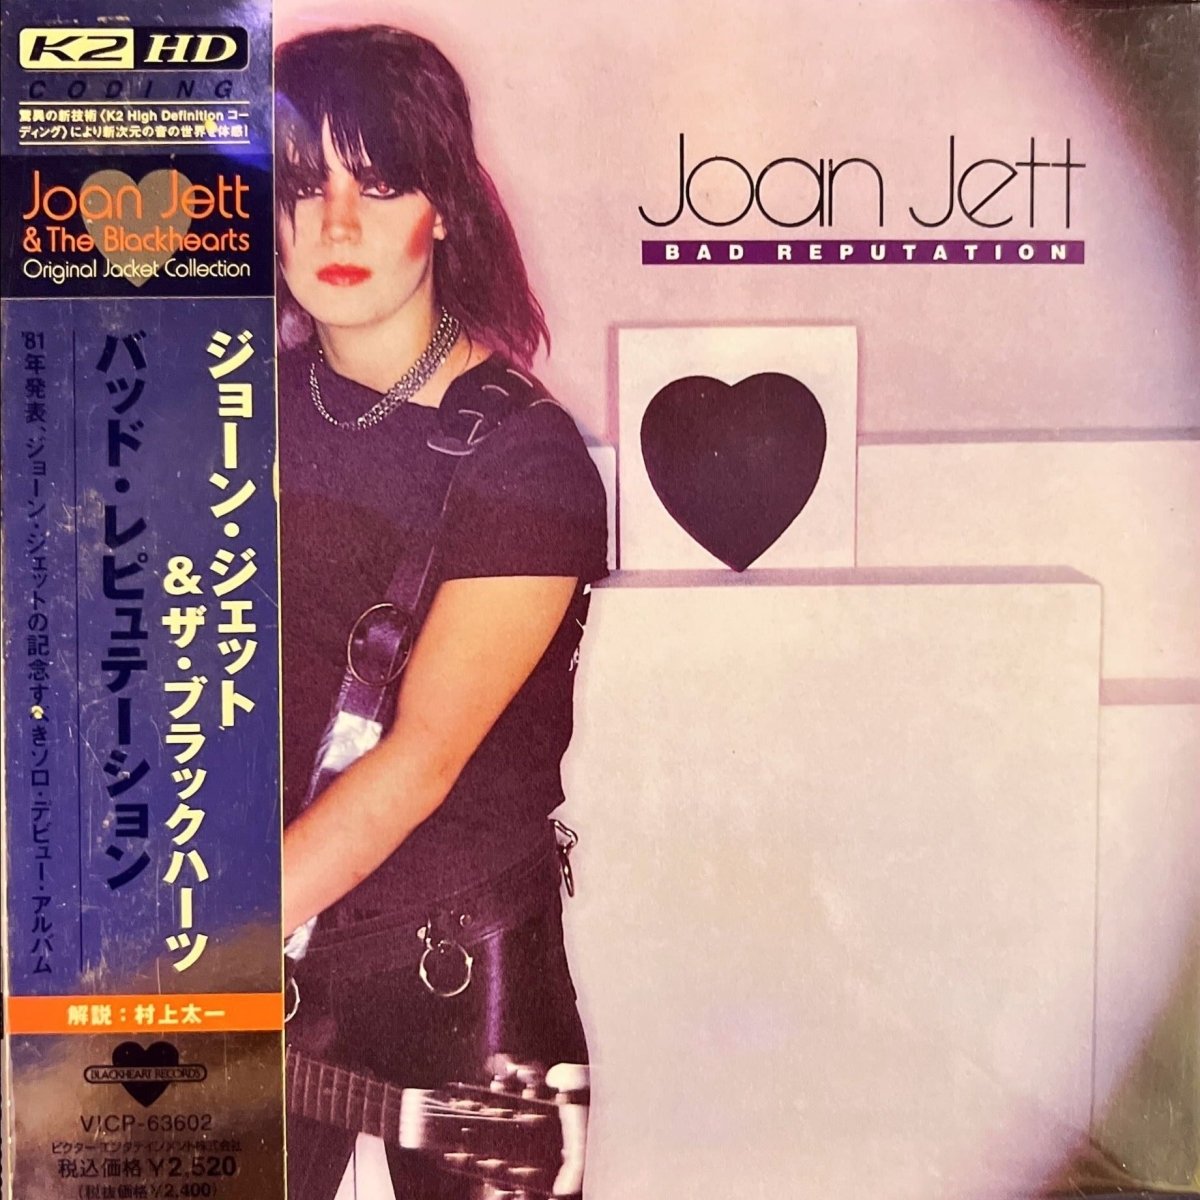 Joan Jett - Joan Jett Music CDs Vinyl